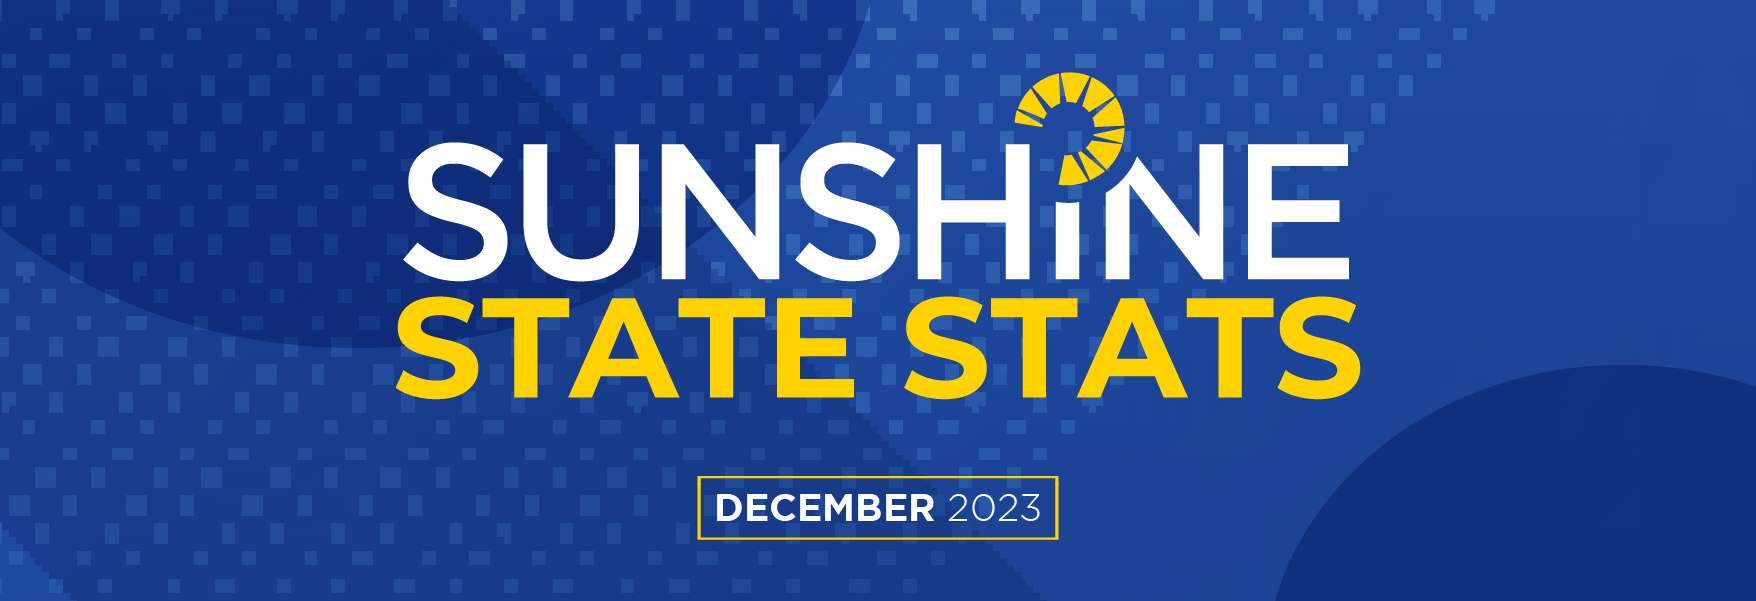 December 2023 Sunshine State Stats